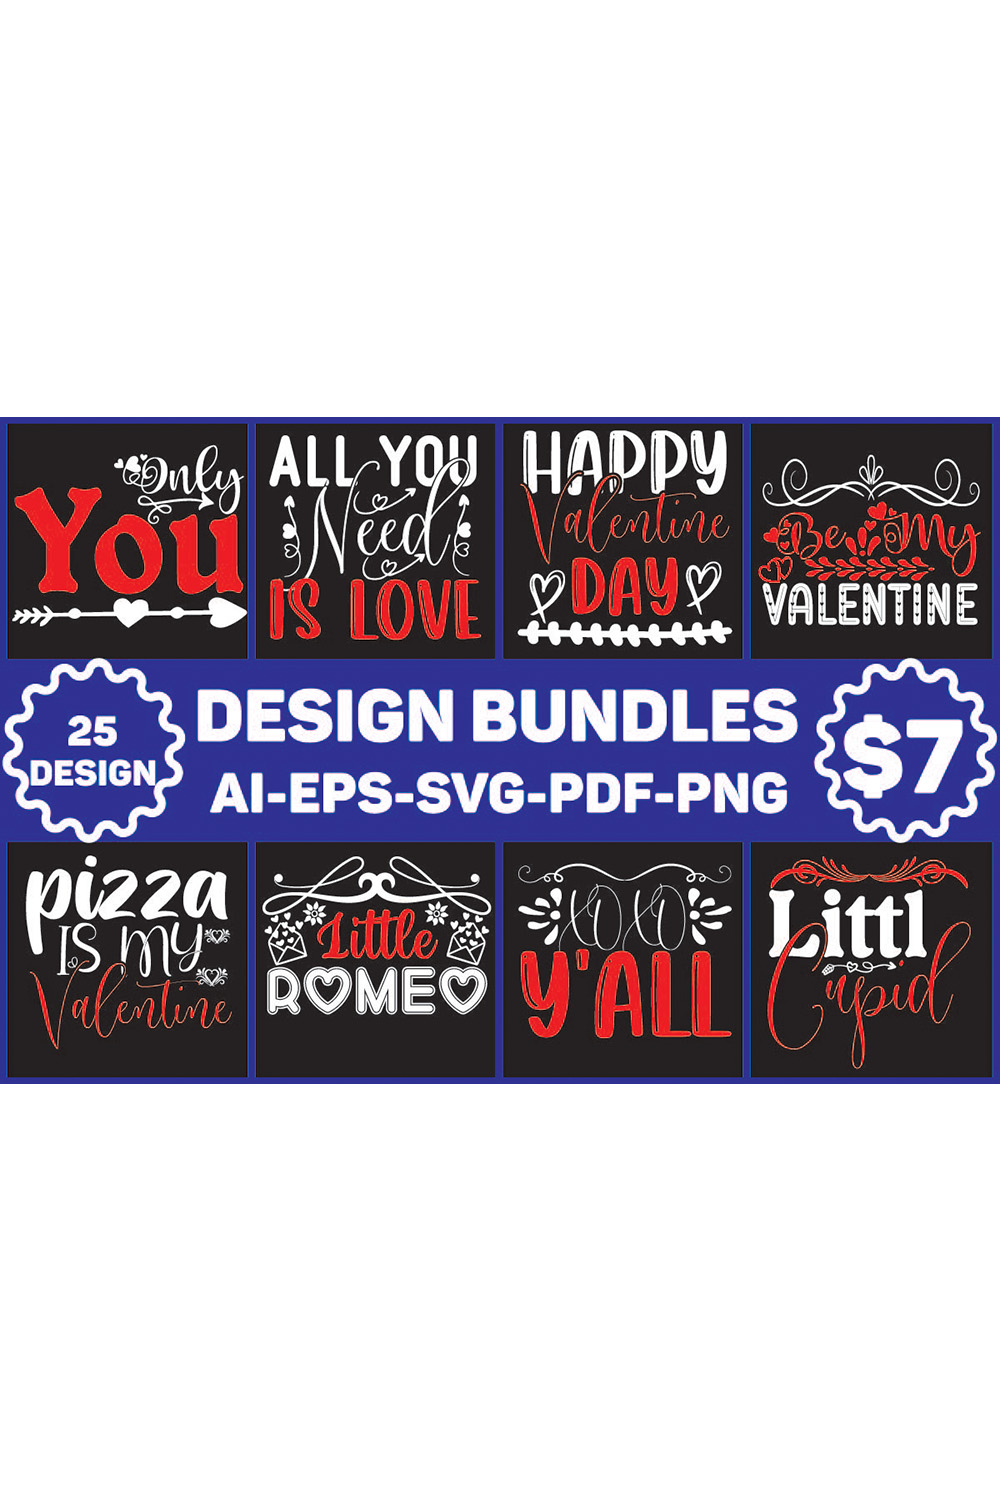 Valentine Designs Bundle pinterest preview image.